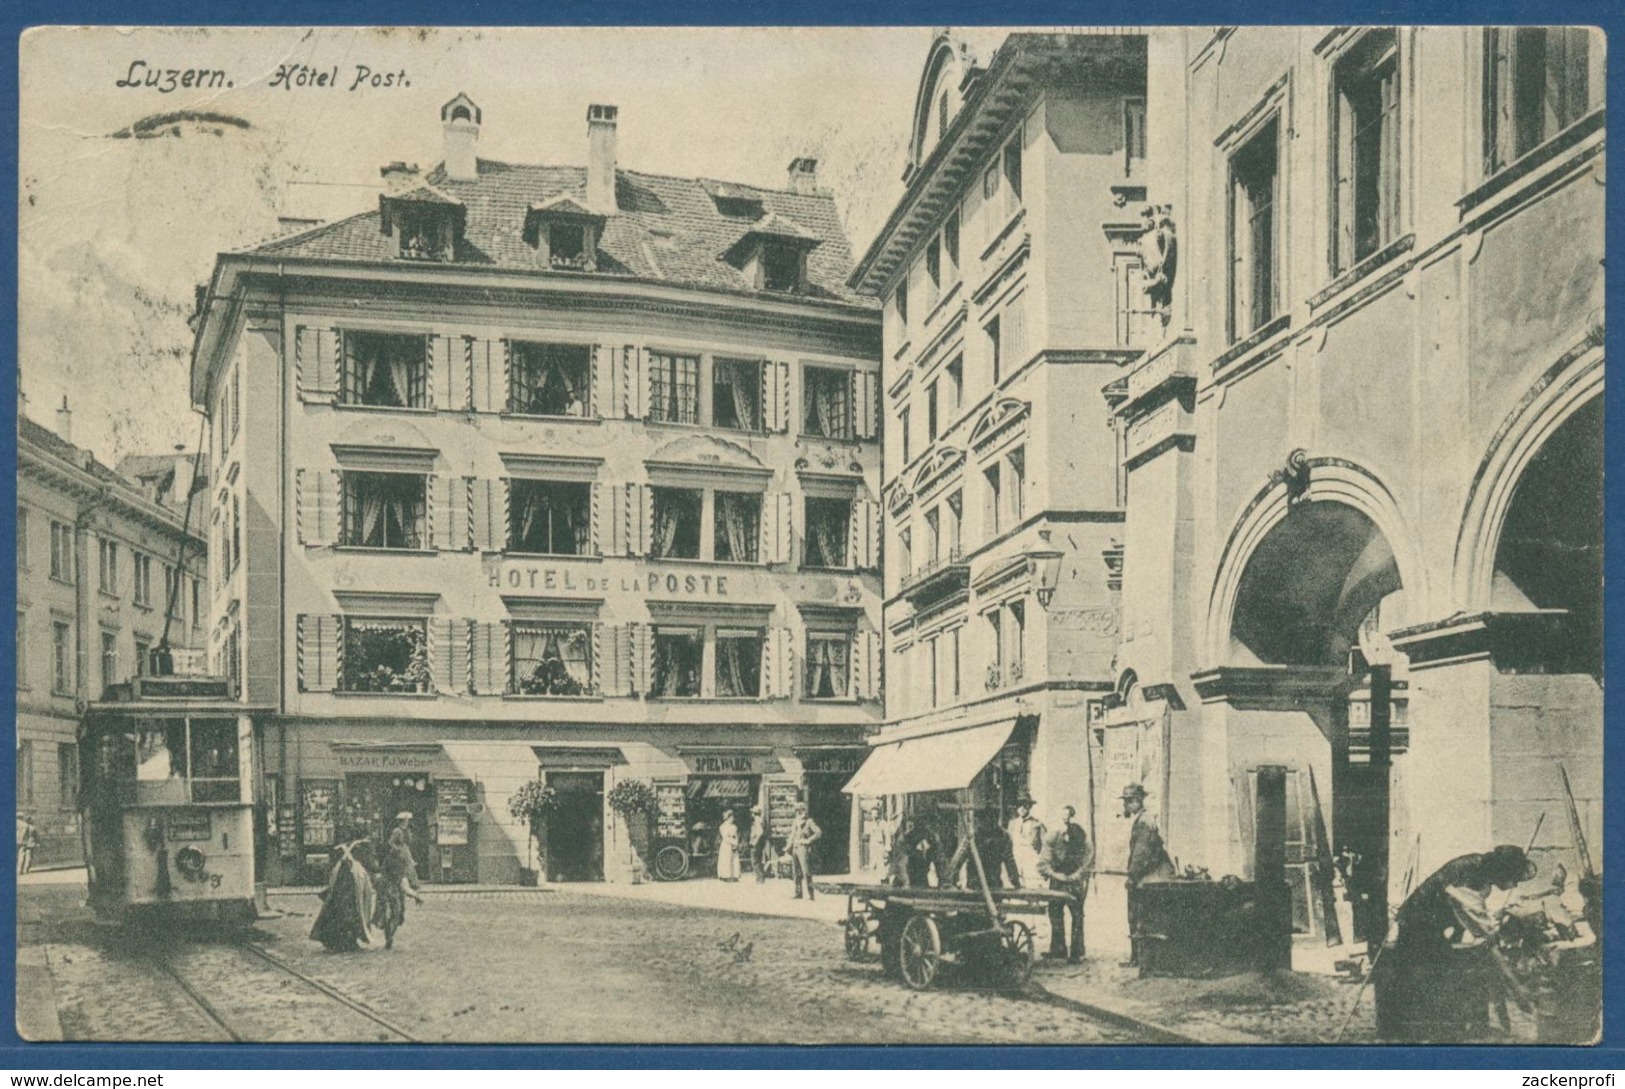 Luzern Hotel Post, Gelaufen 1909 Marke Fehlt (AK2585) - Luzern